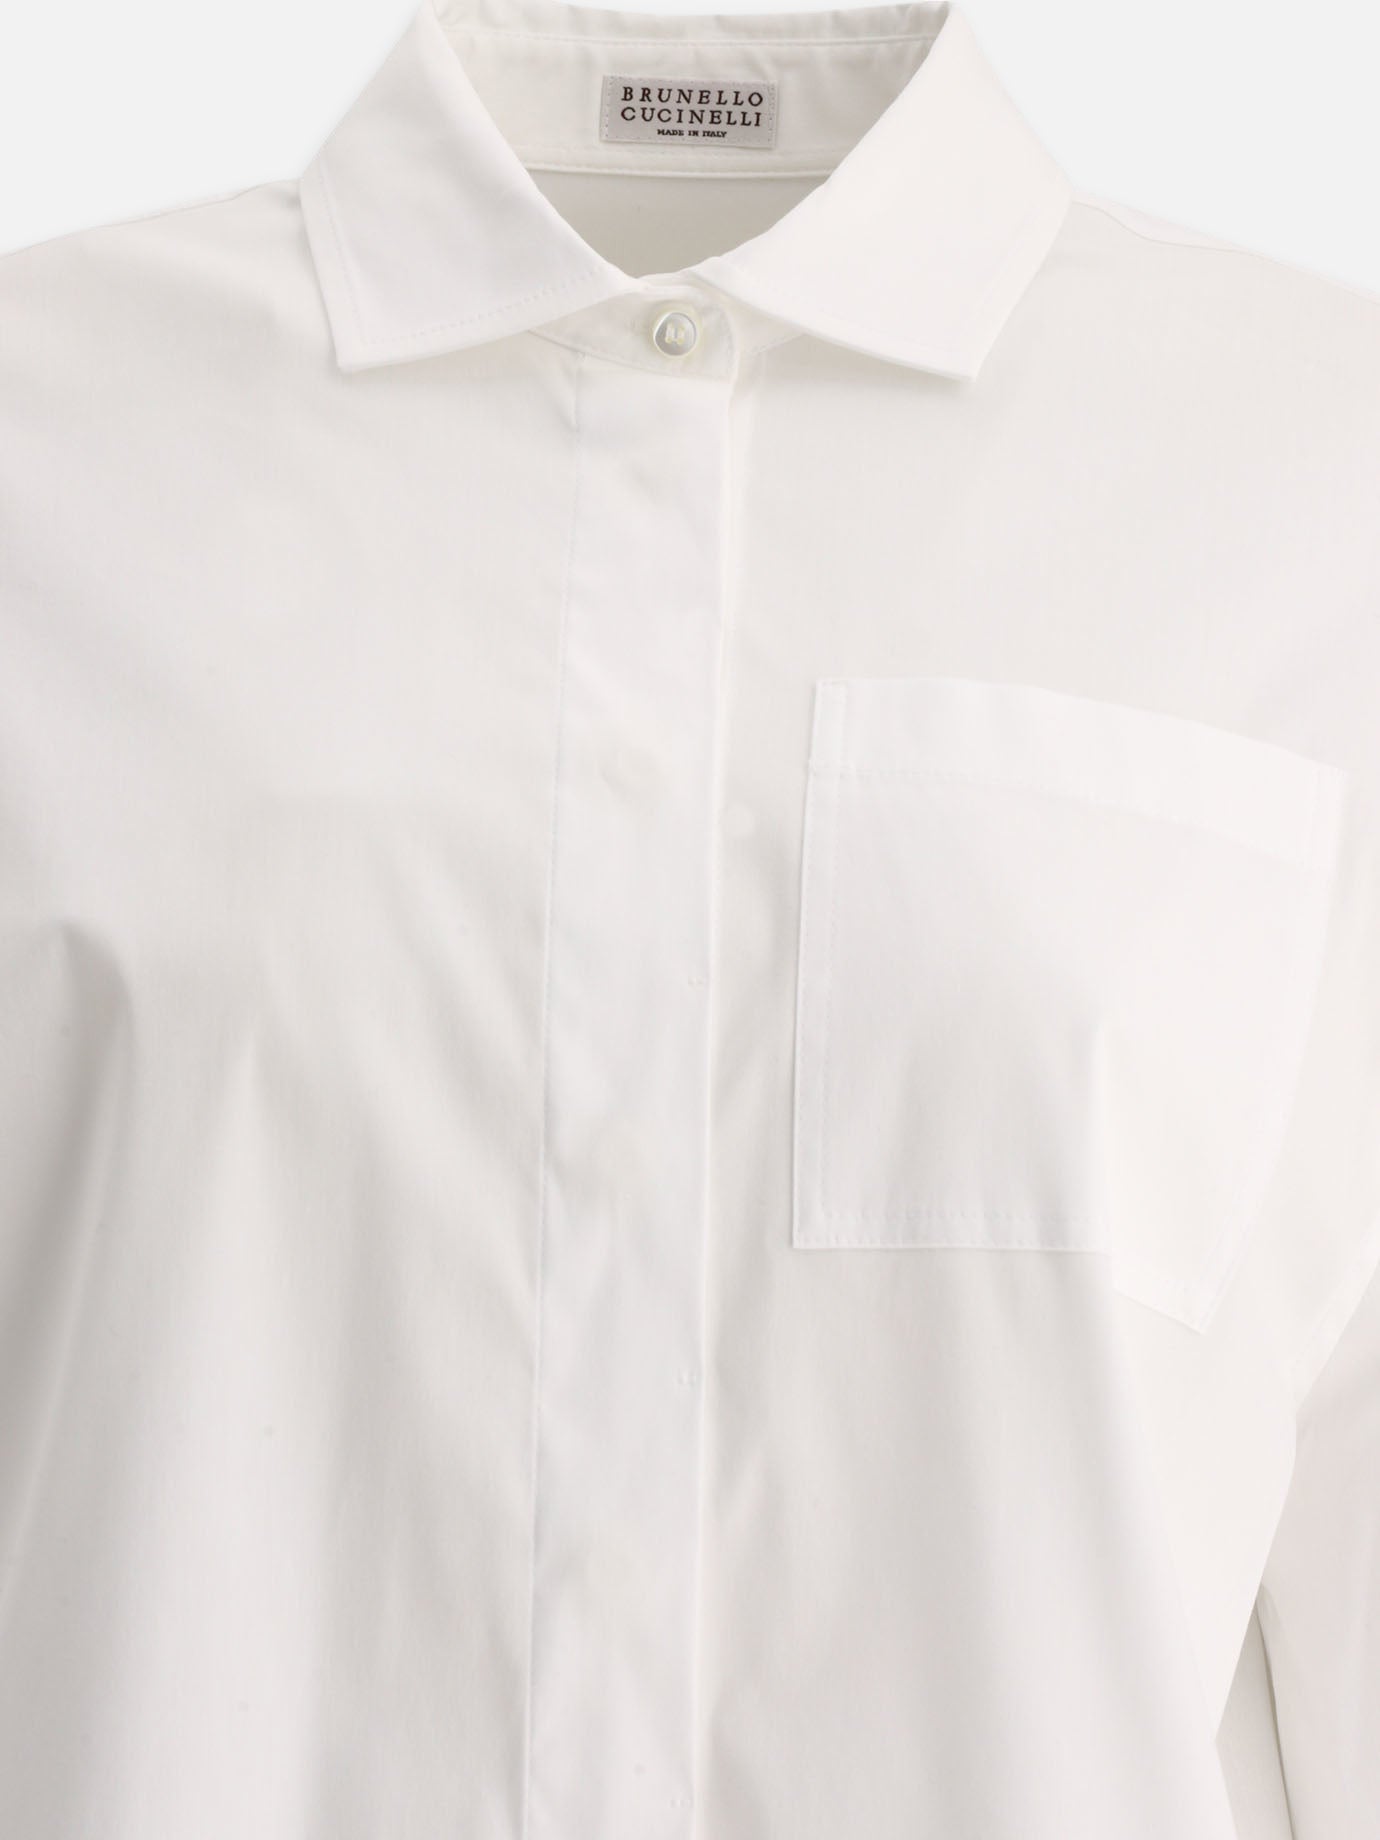 Poplin shirt with shiny cuff details